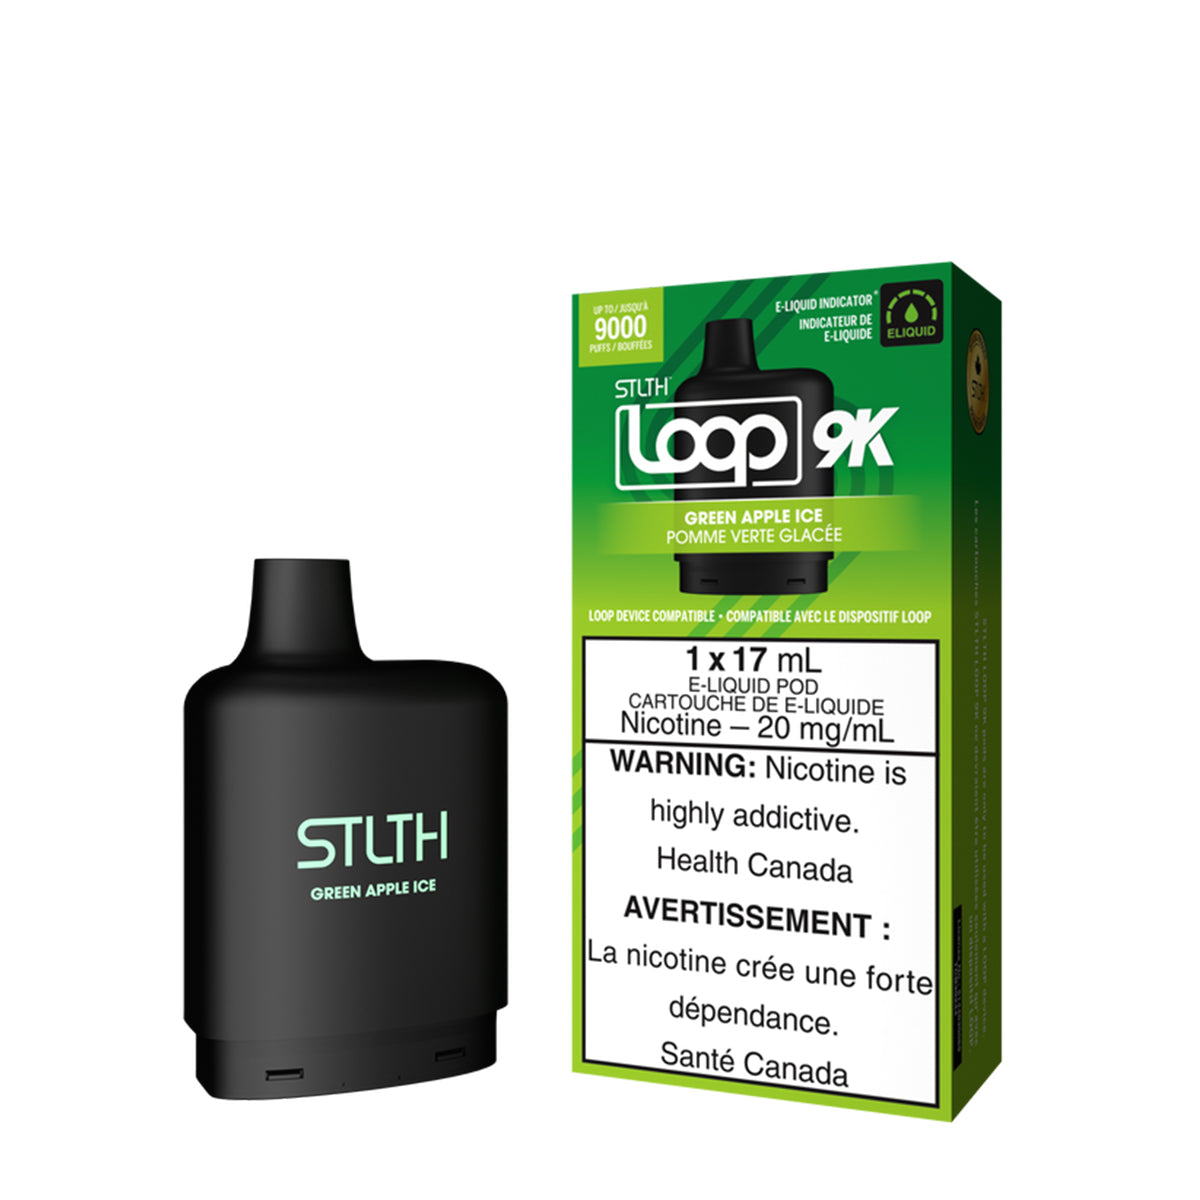 Stlth Loop 9k - Green Apple Ice (1x17mL) (6965305606199)